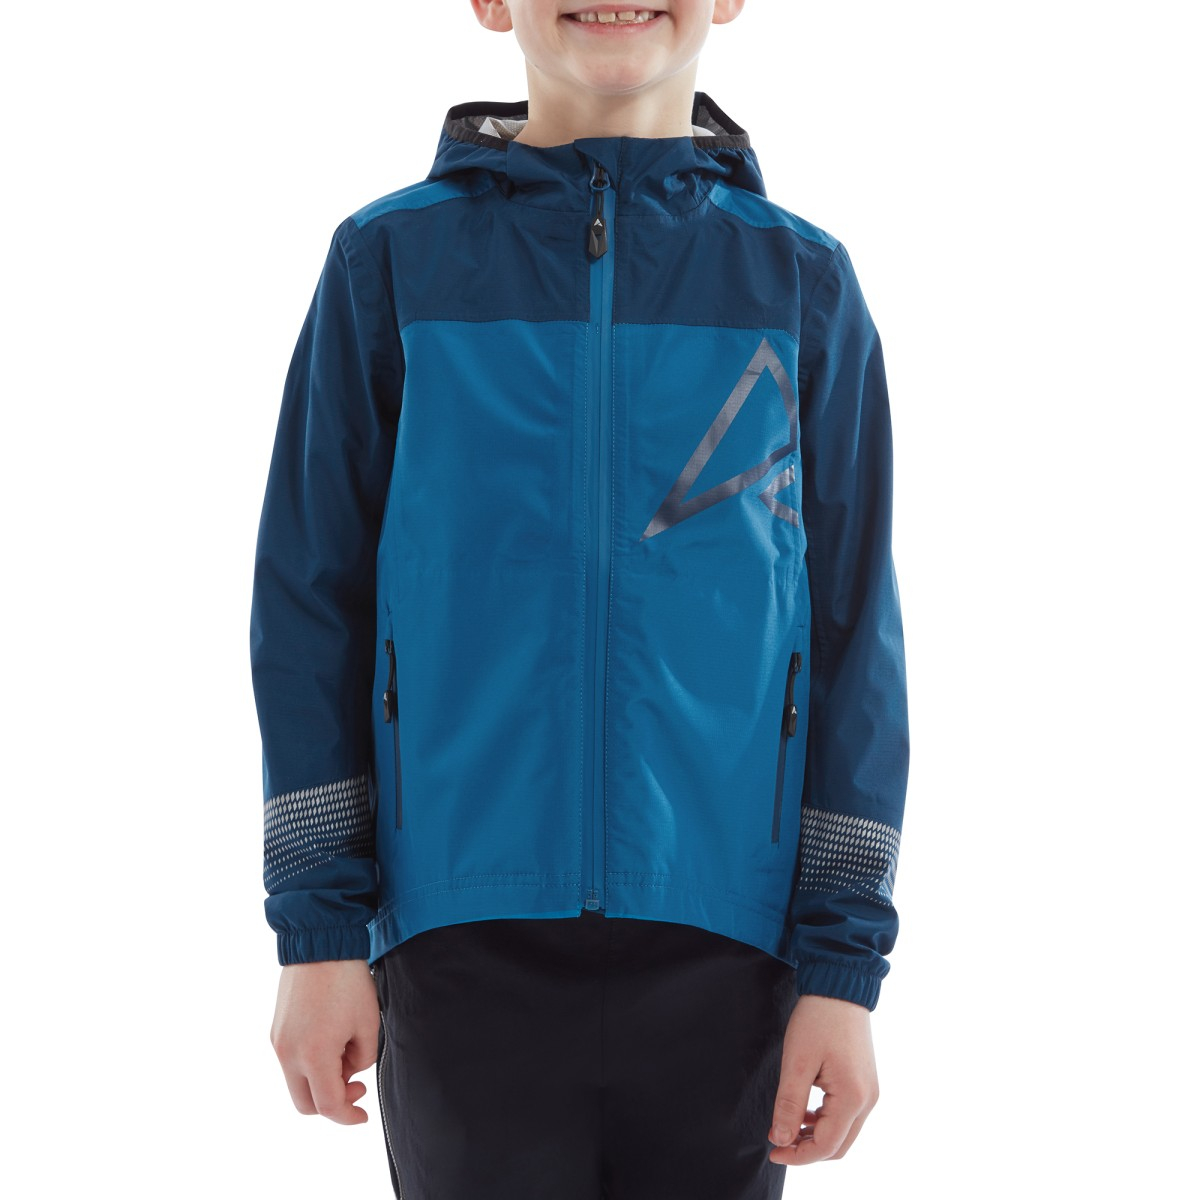 Altura  Spark Kids Waterproof Cycling Jacket 11 to 12 Years BLUE